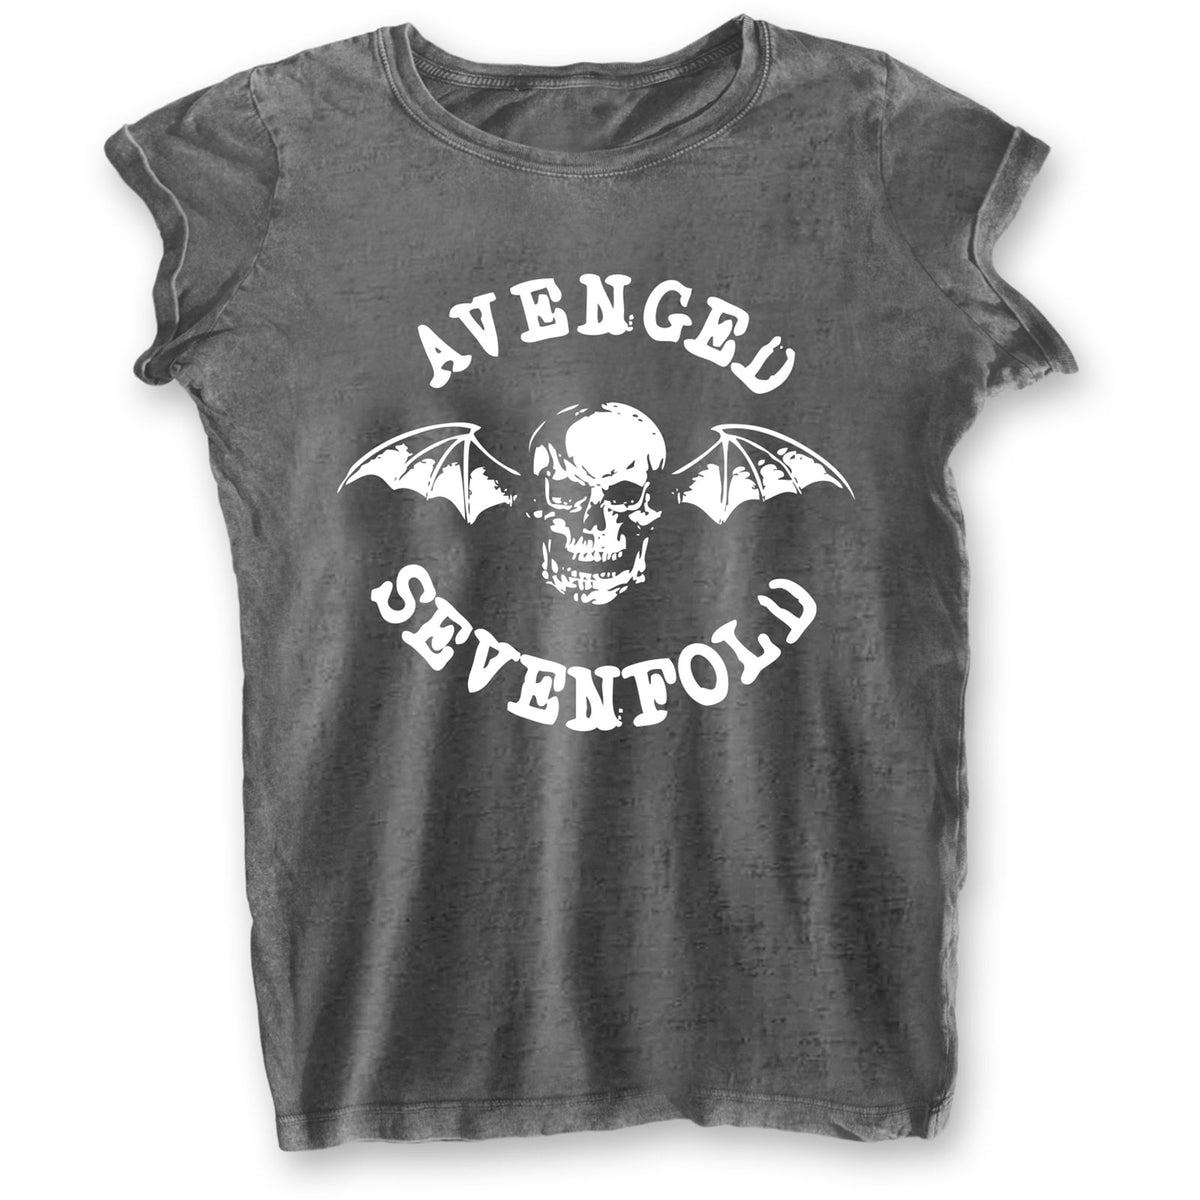 Avenged Sevenfold Ladies T-Shirt - Deathbat (Burnout)- Official Licensed Design